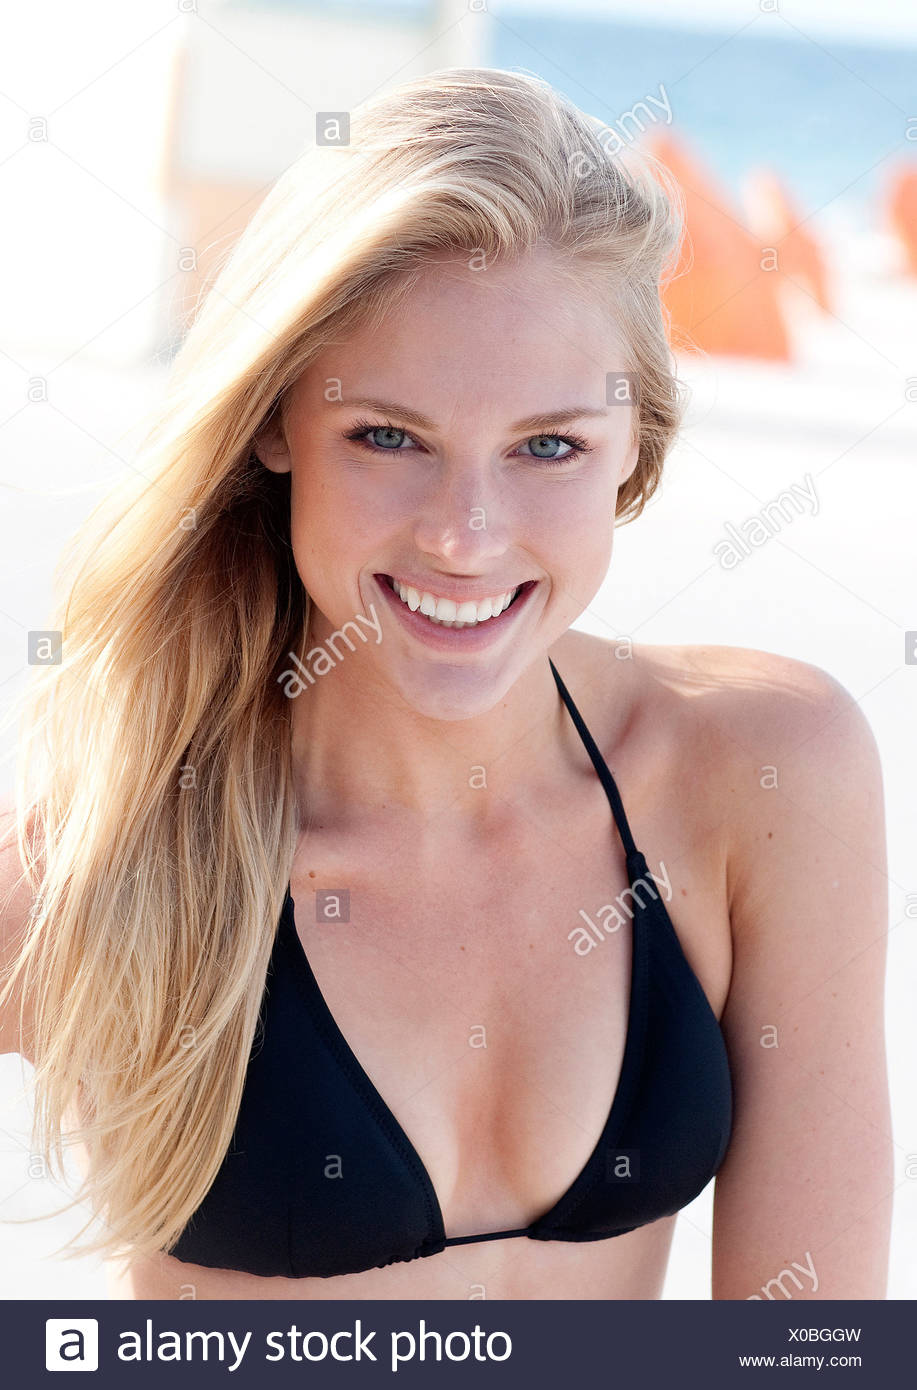 Female With Long Straight Blonde Hair Wearing Black Bikini